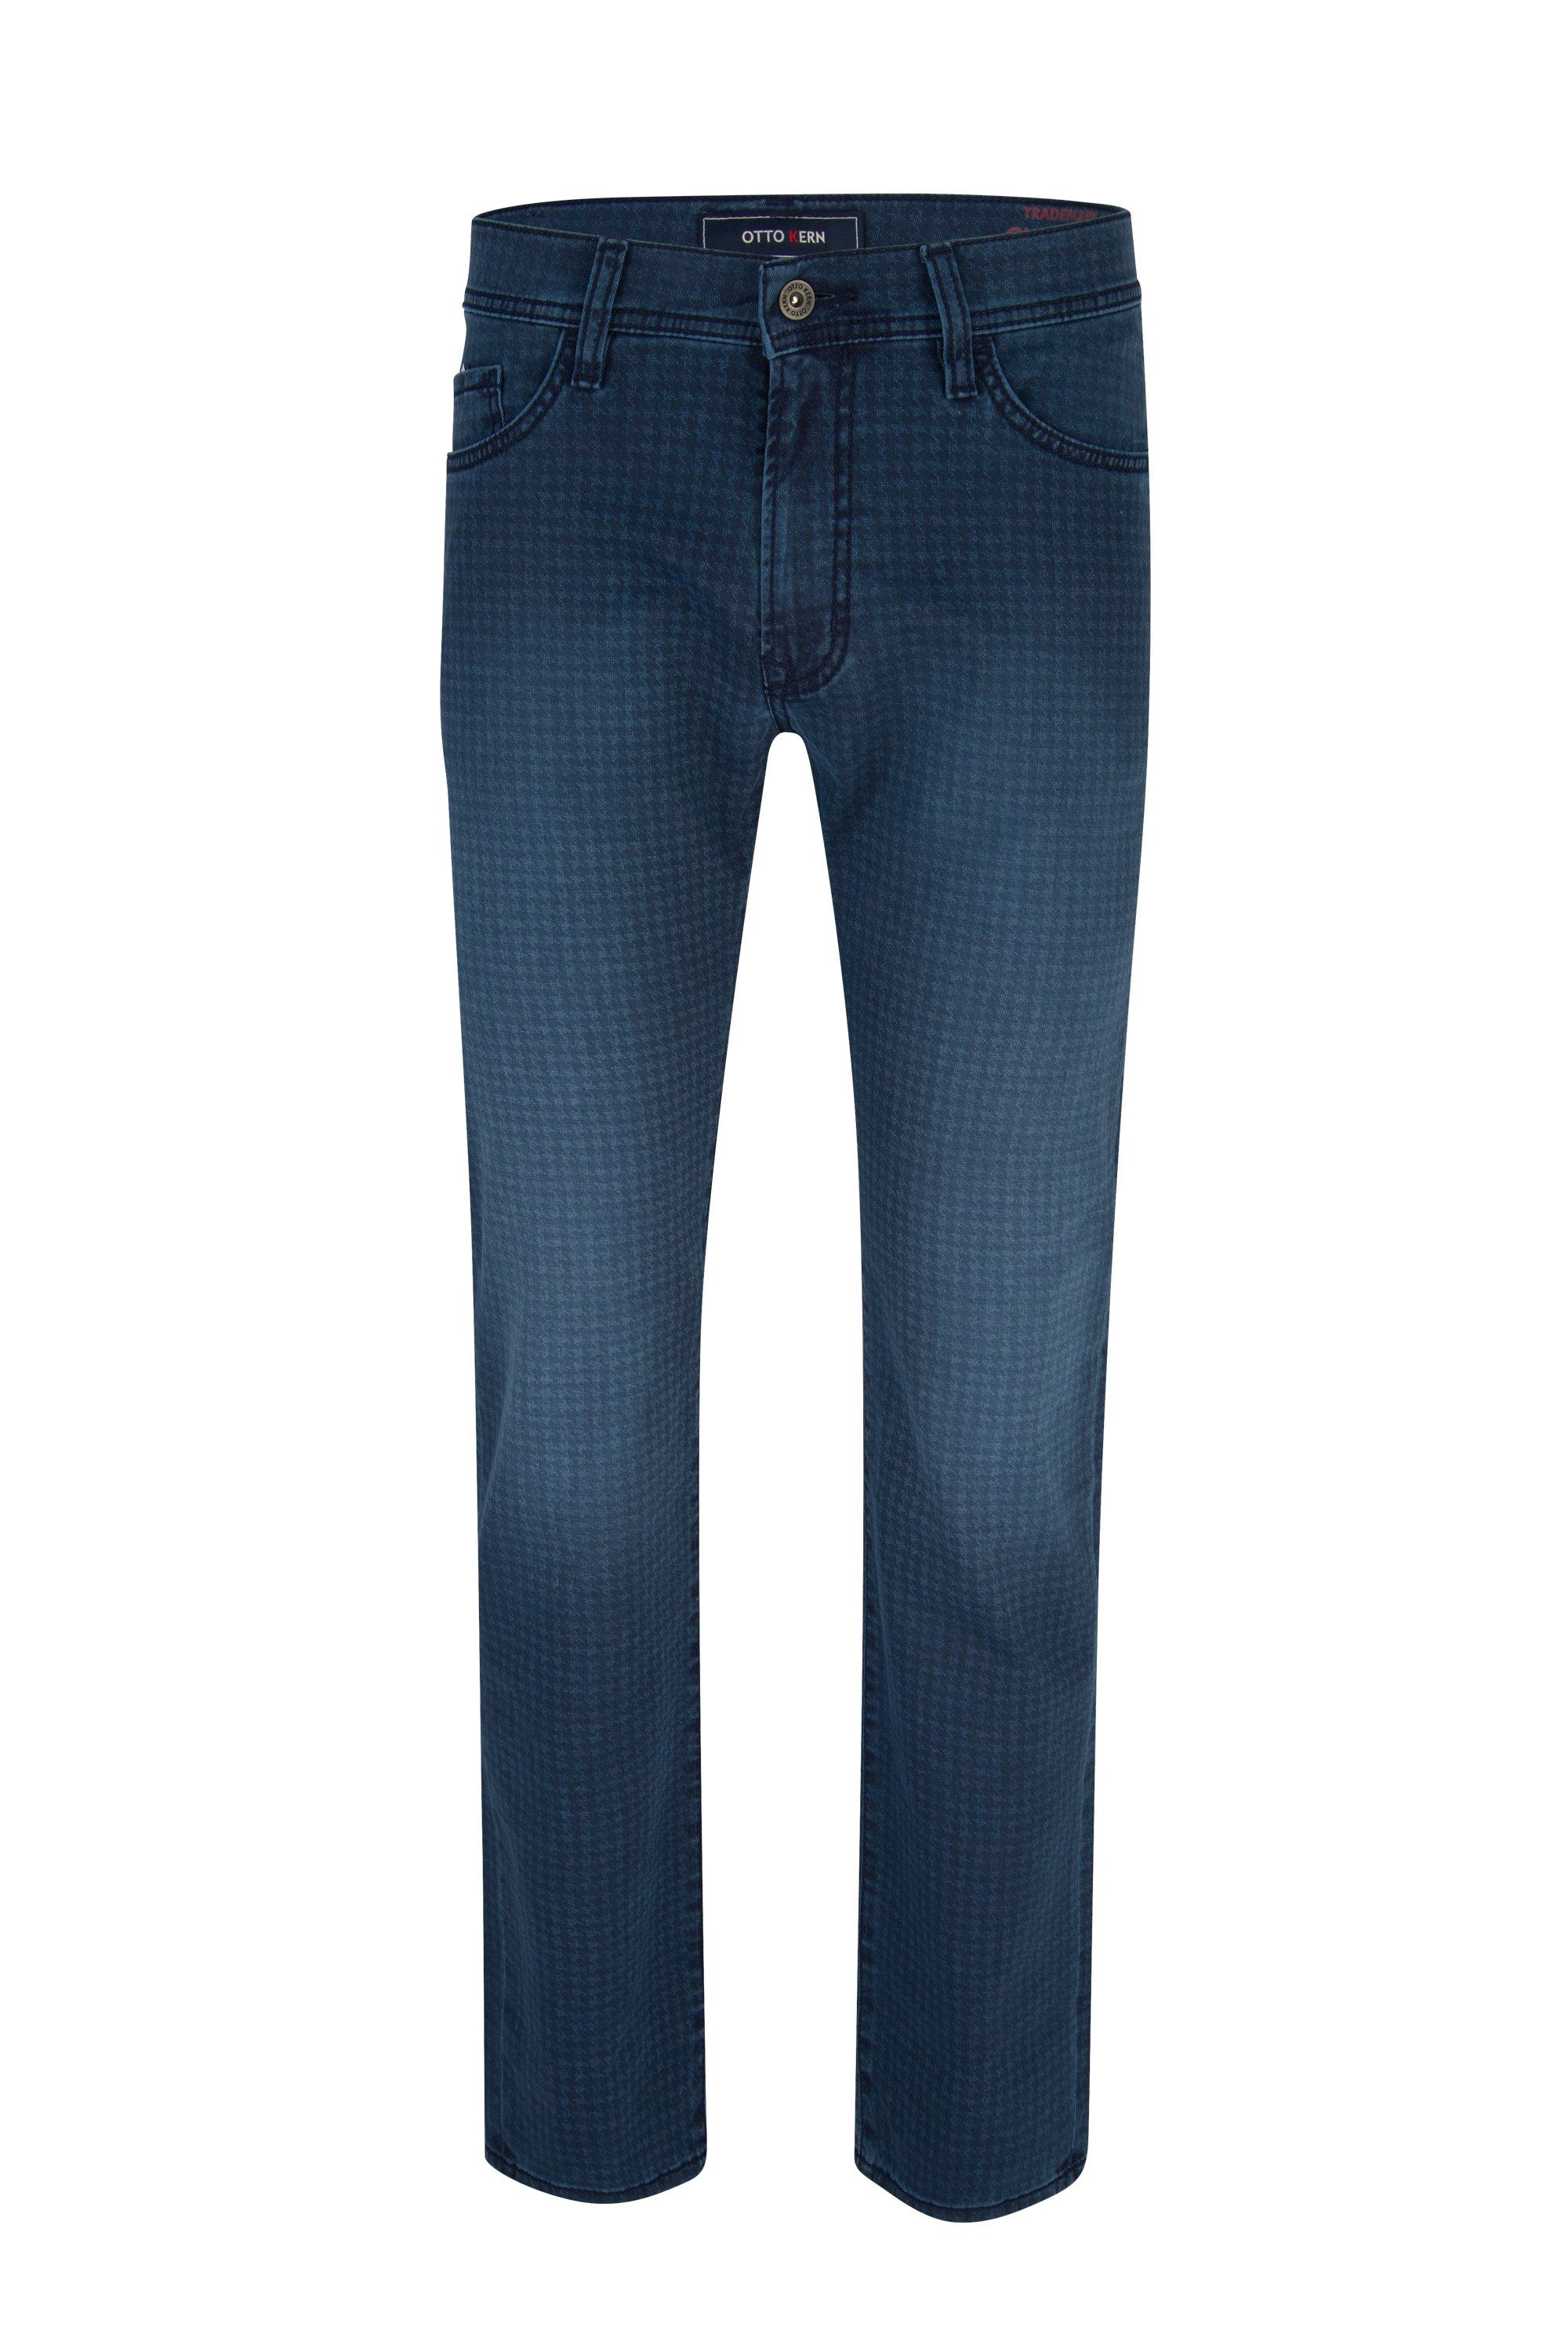 patterned KERN 5-Pocket-Jeans OTTO used 6700.6822 67042 Kern JOHN blue